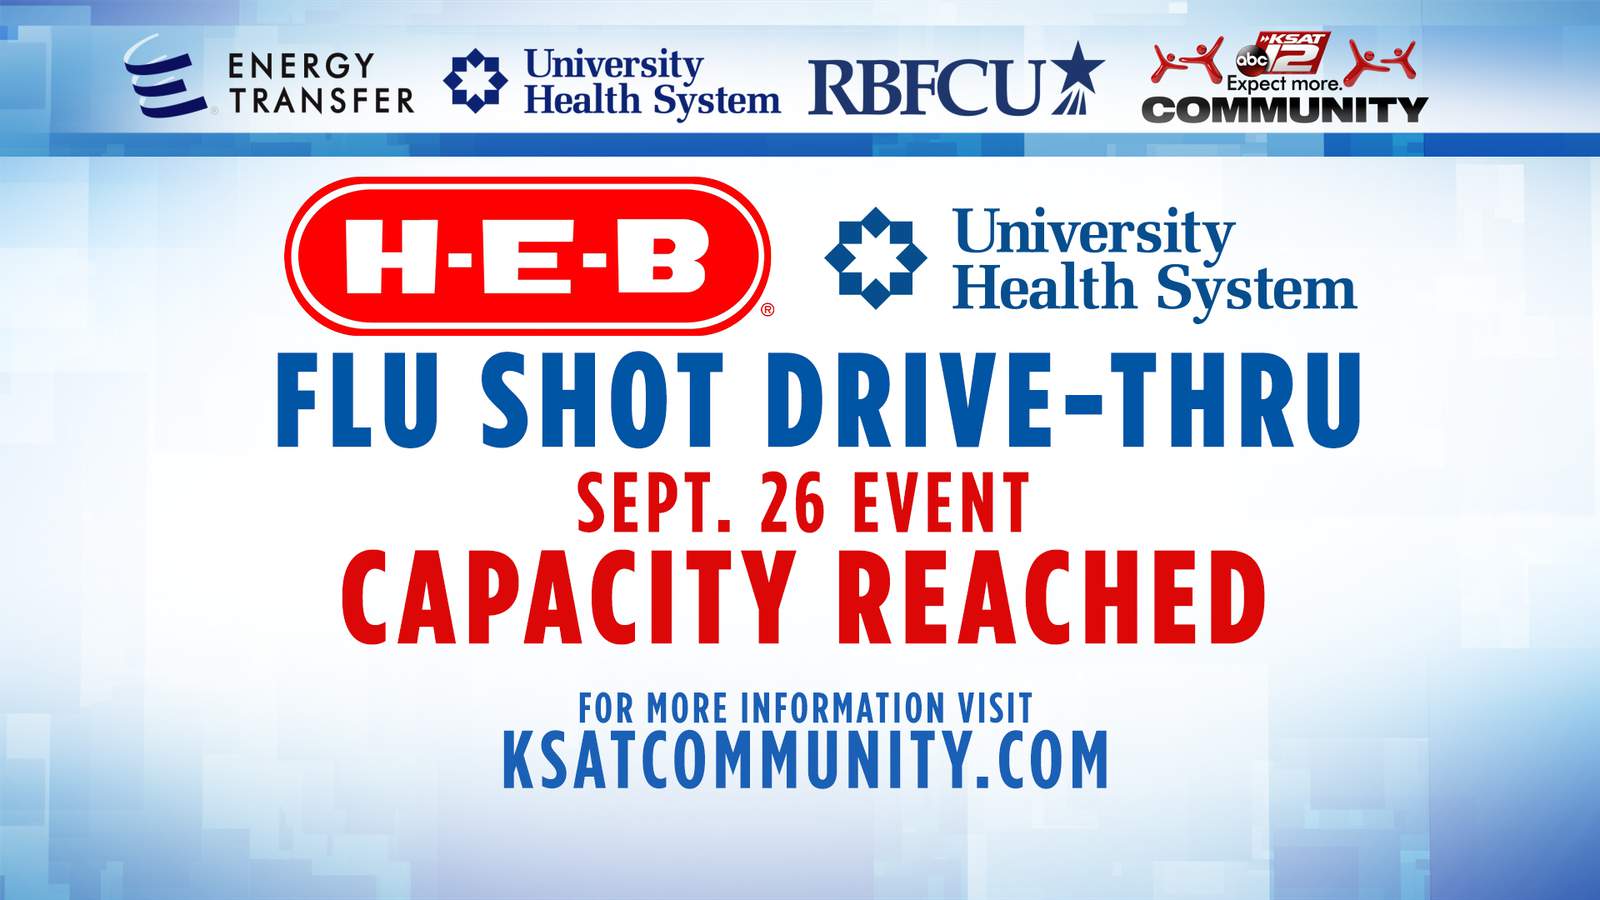 Flu shot drive-thru with University Health System and H-E-B pharmacy underway at Freeman Coliseum